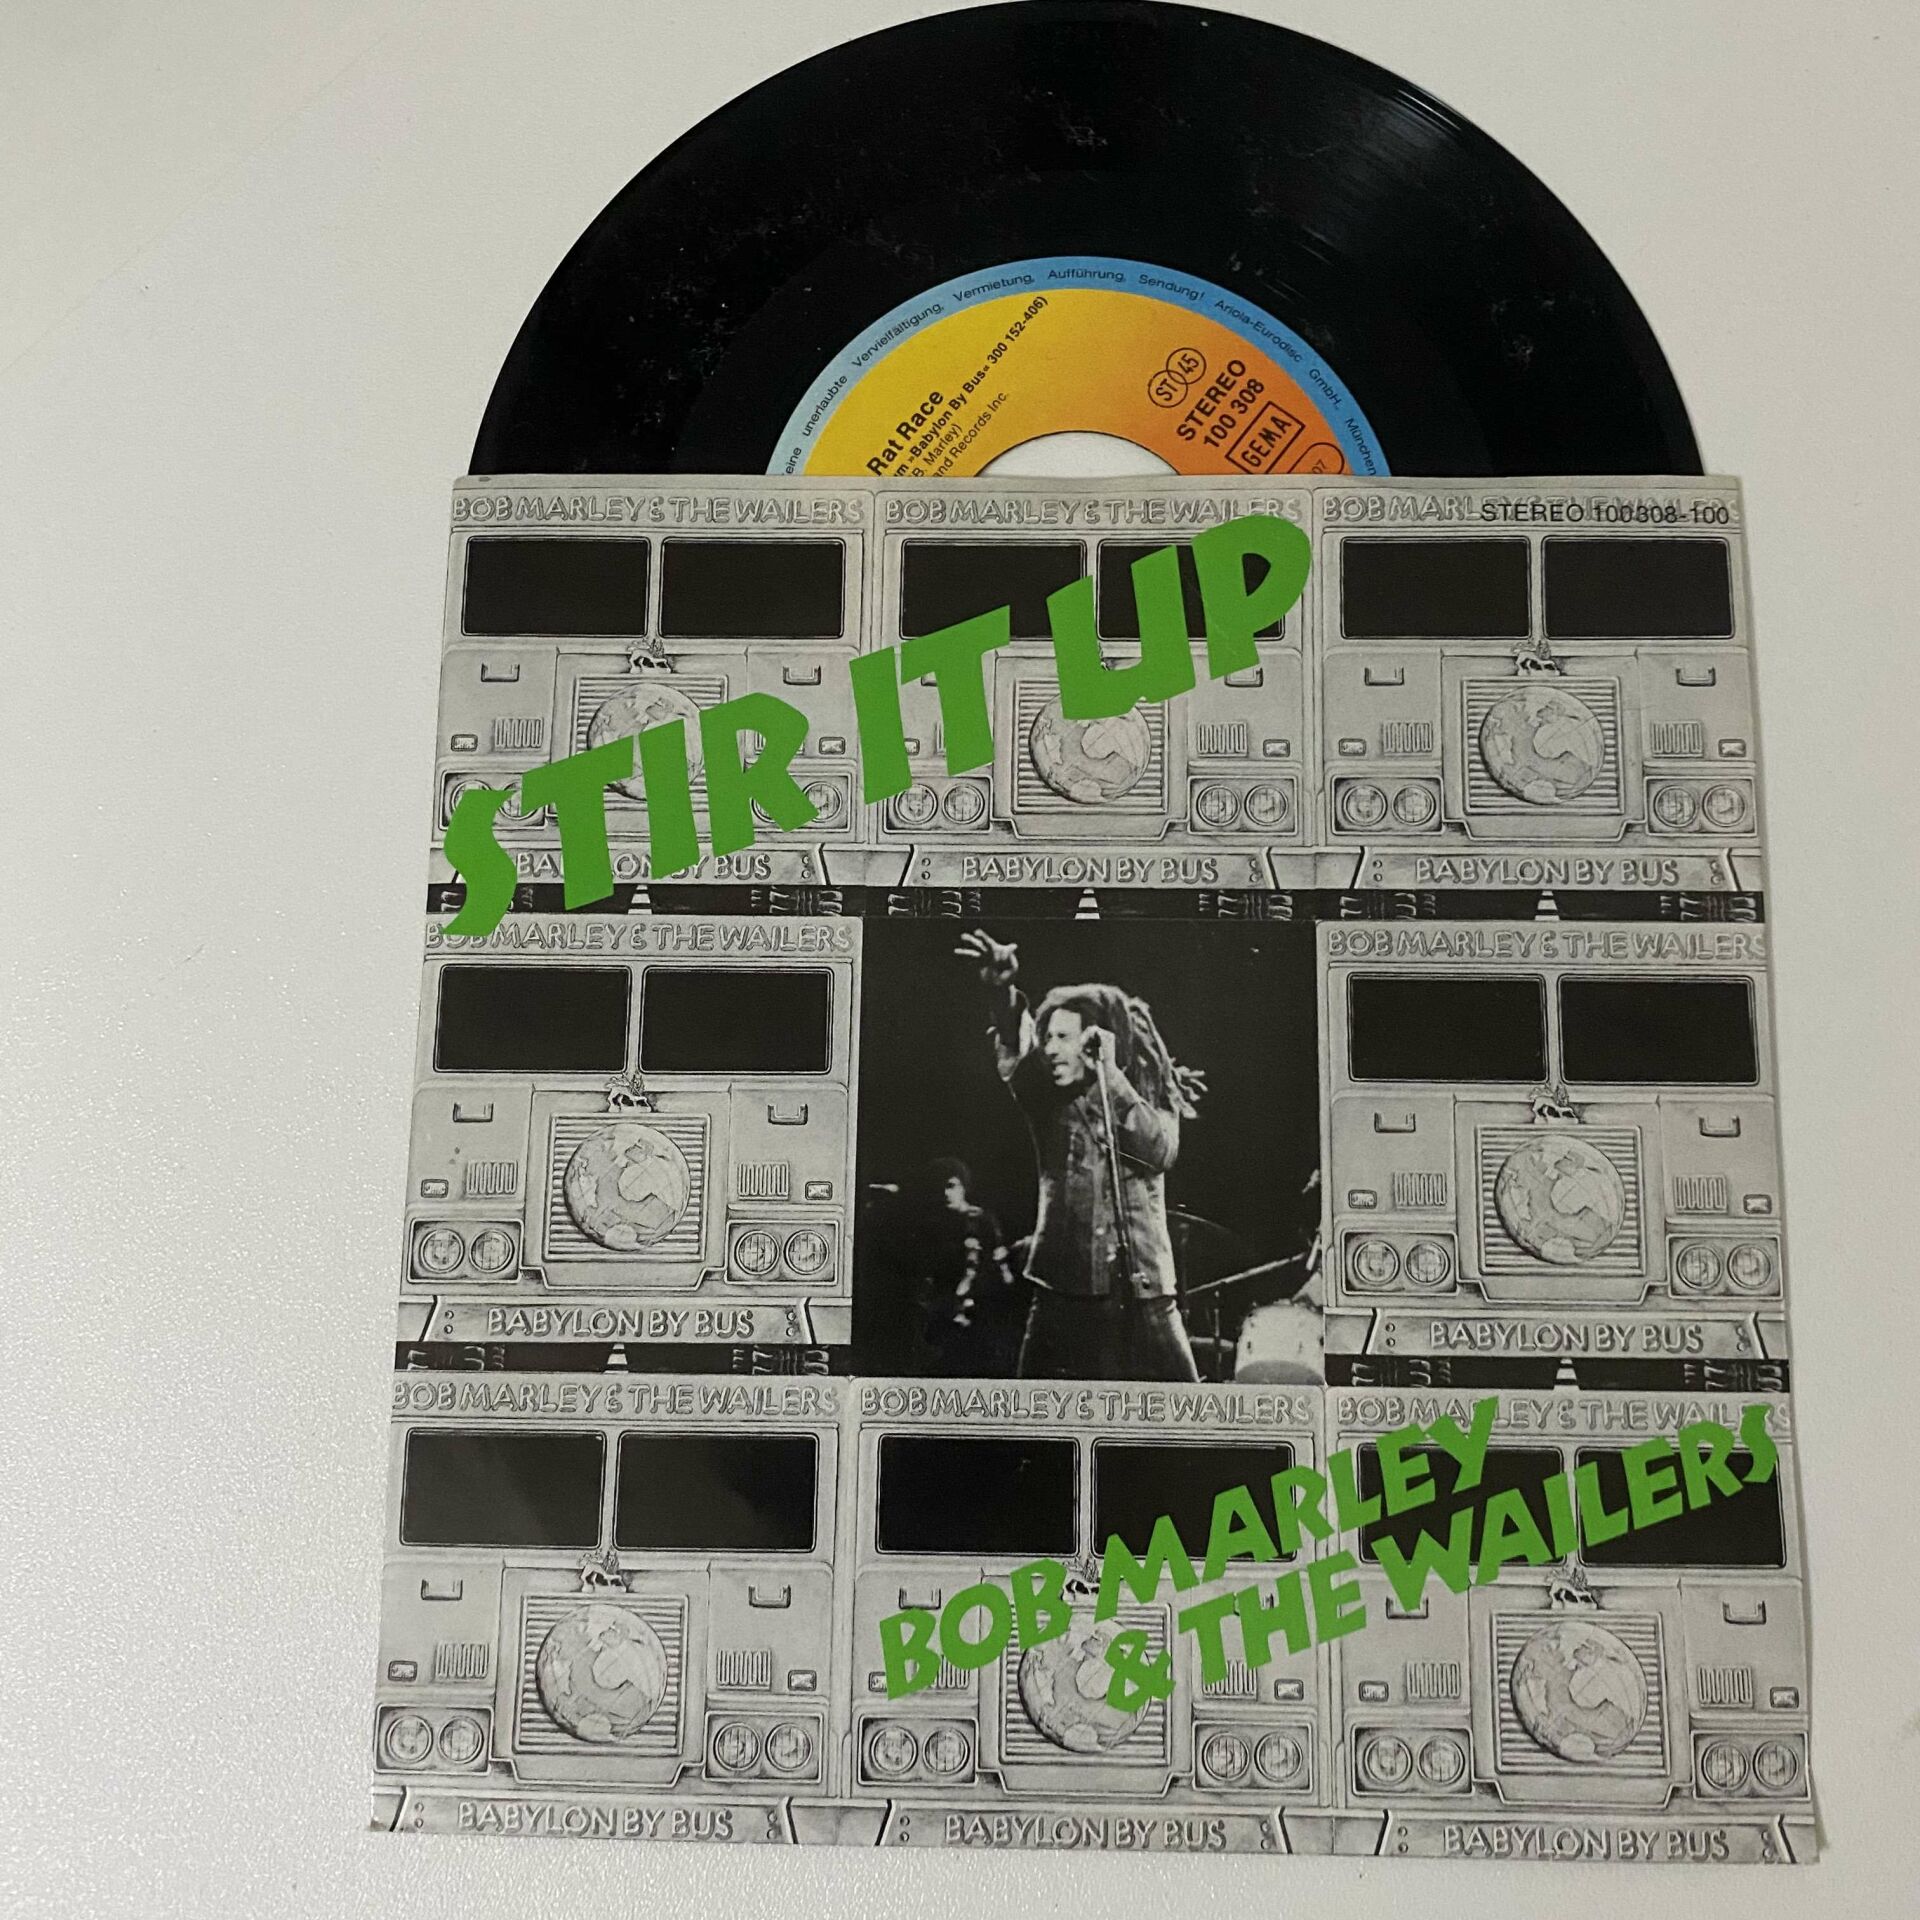 Bob Marley & The Wailers – Stir It Up